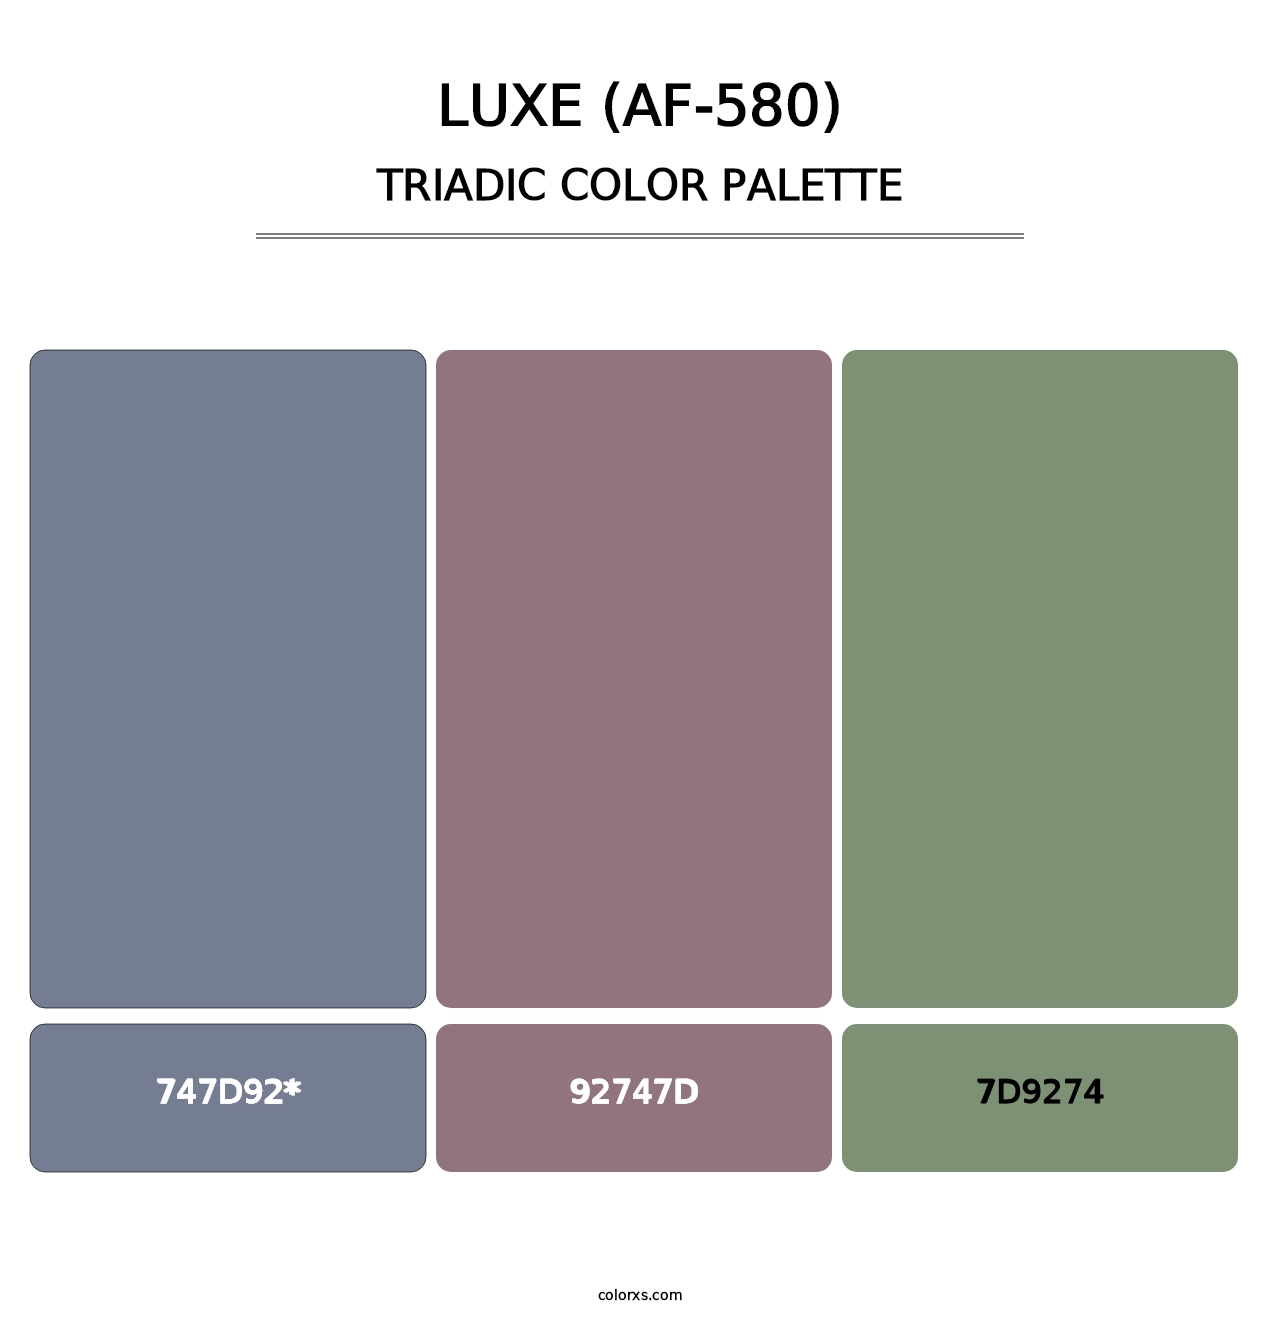 Luxe (AF-580) - Triadic Color Palette